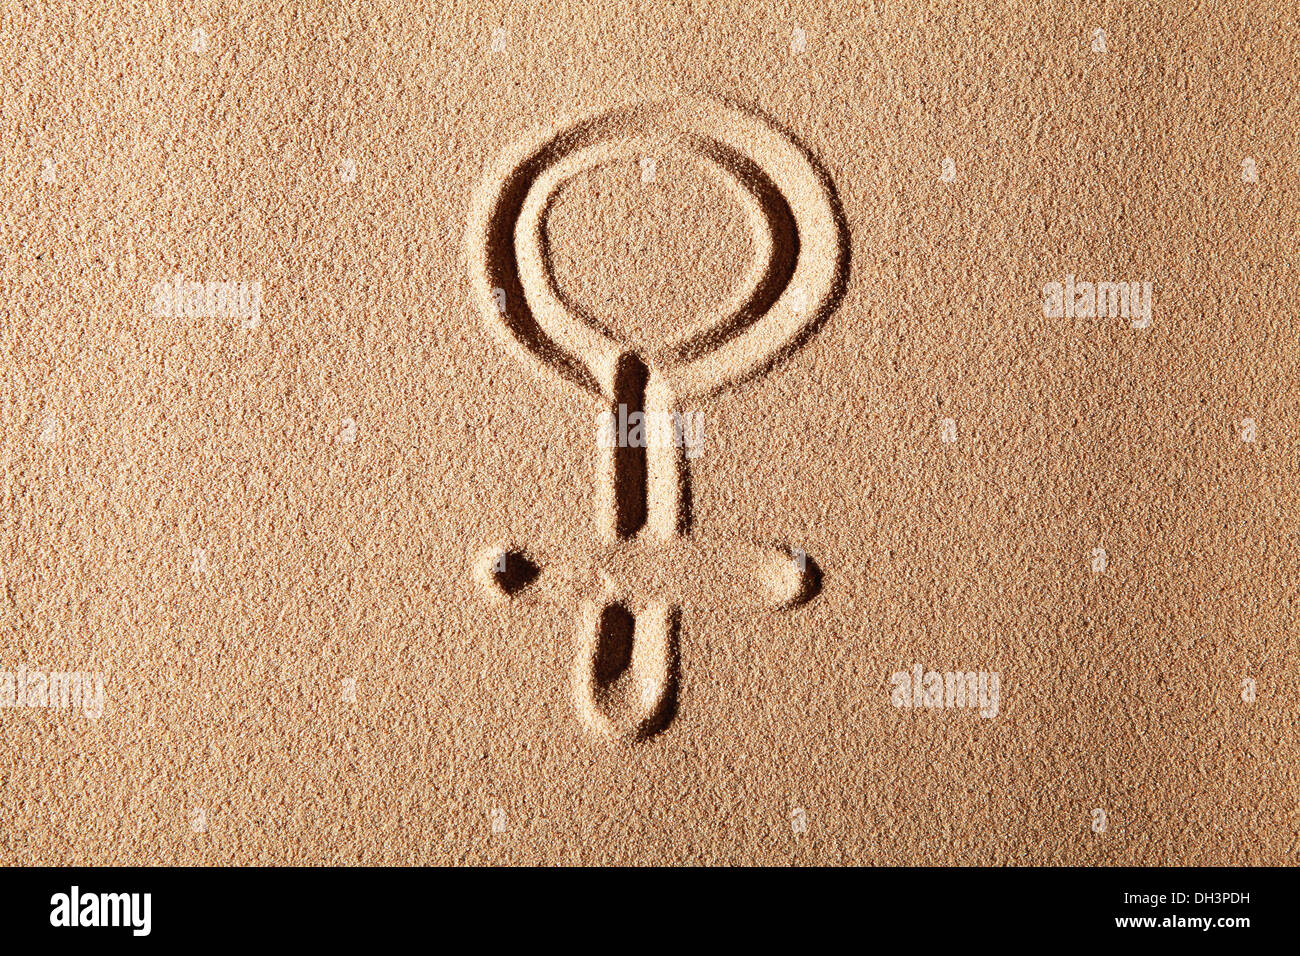 Venus sign, symbol of femininity, drawn in sand Stock Photo